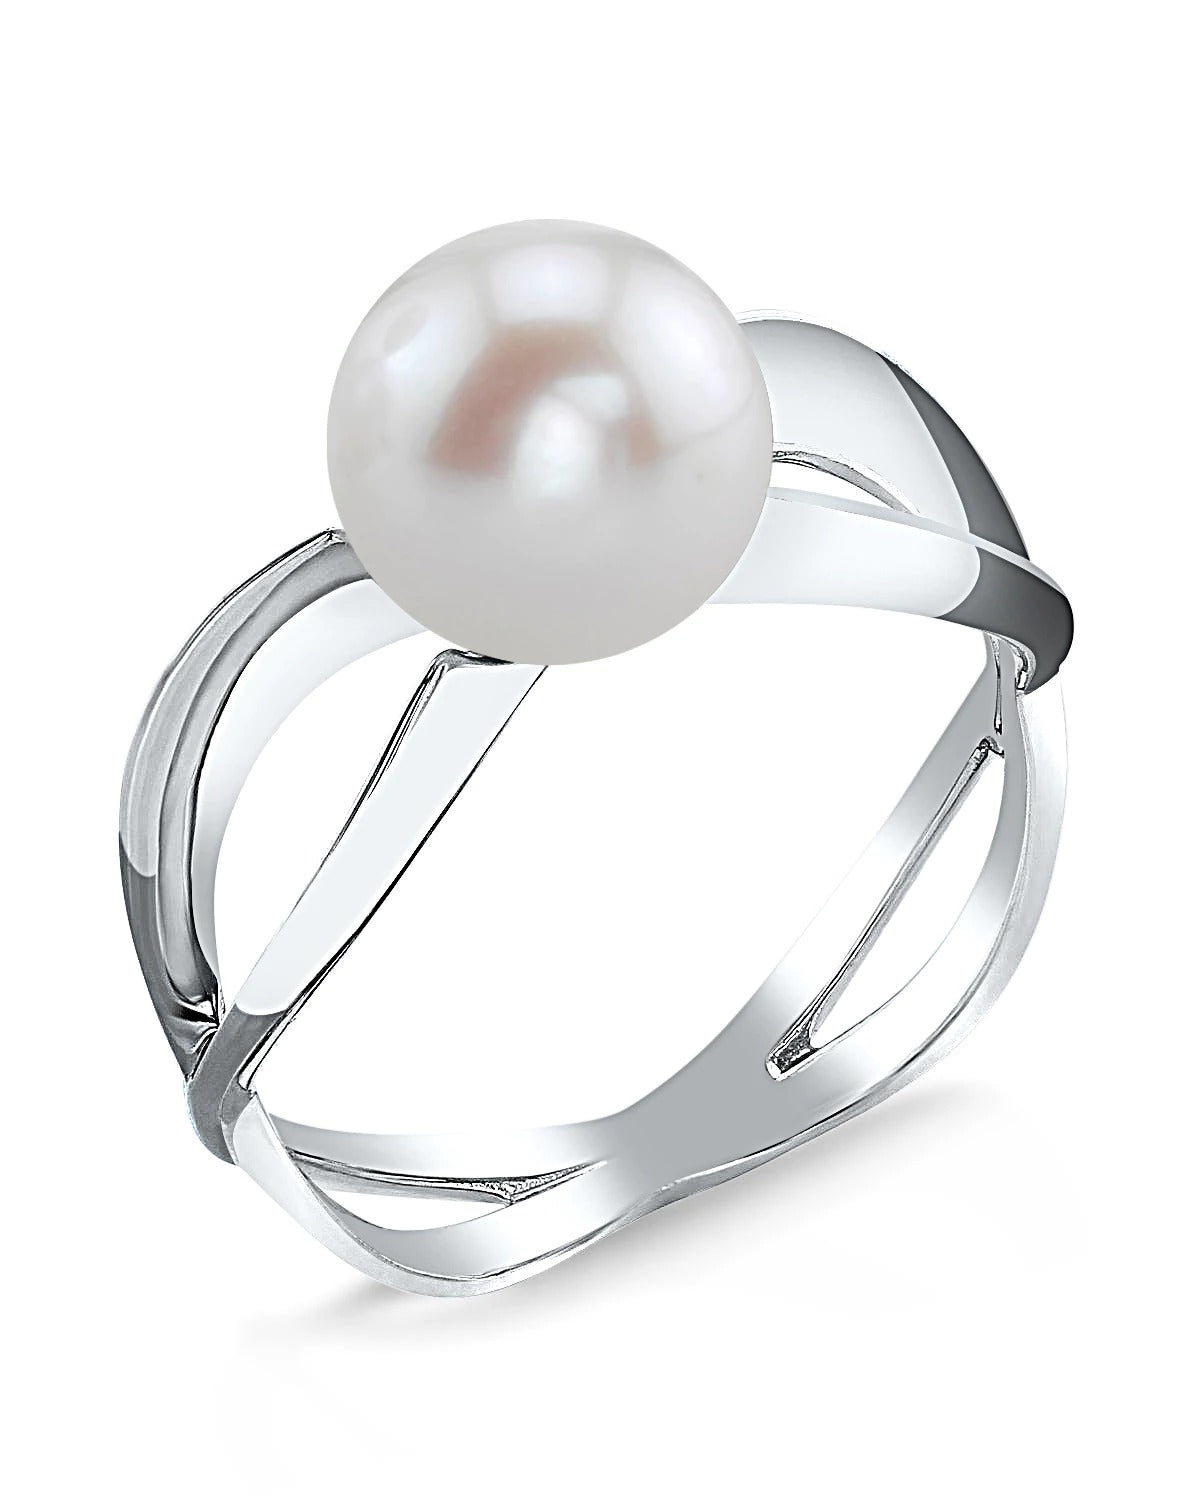 Details of Lana Freshwater Pearl Engagement Ring